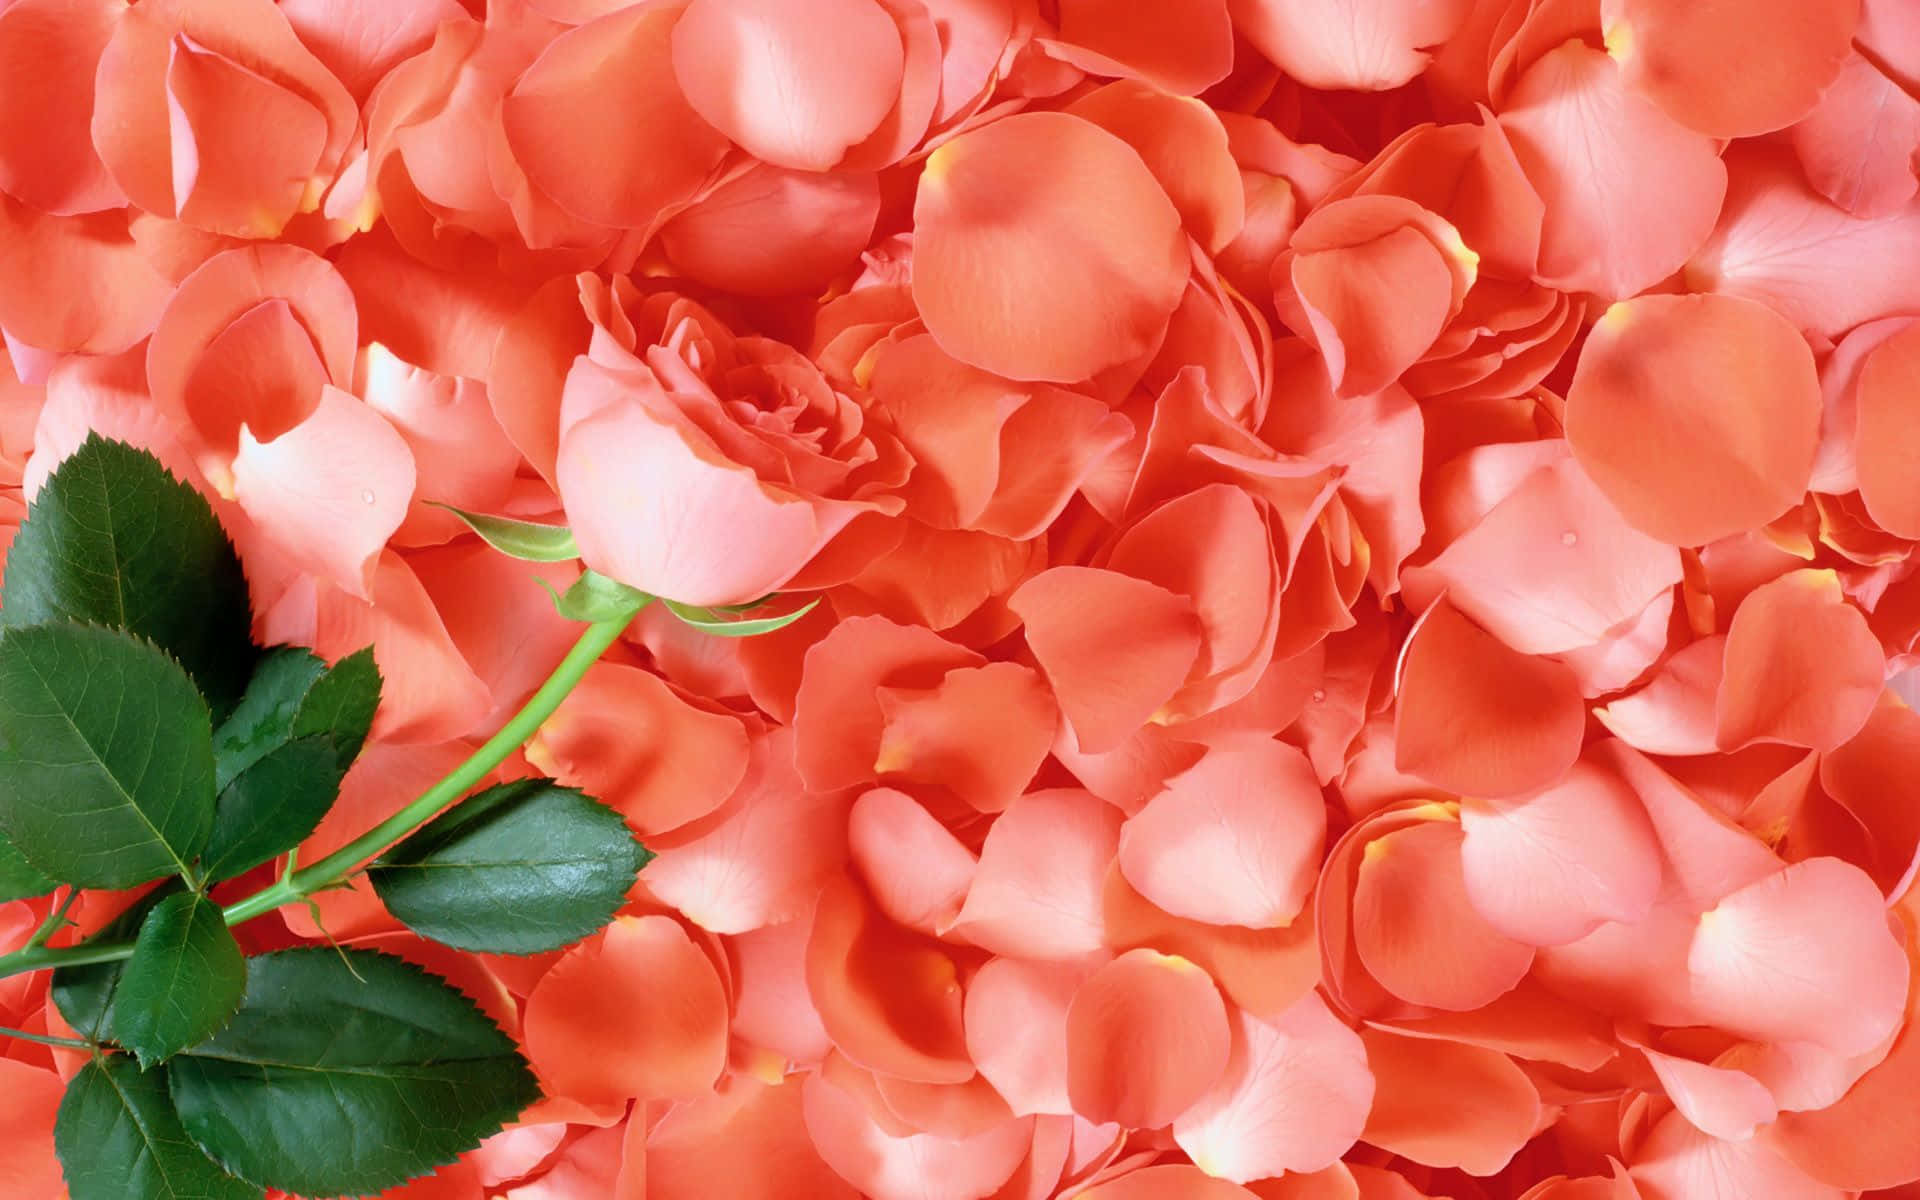 Vibrant Red Rose Petal Close-up Wallpaper